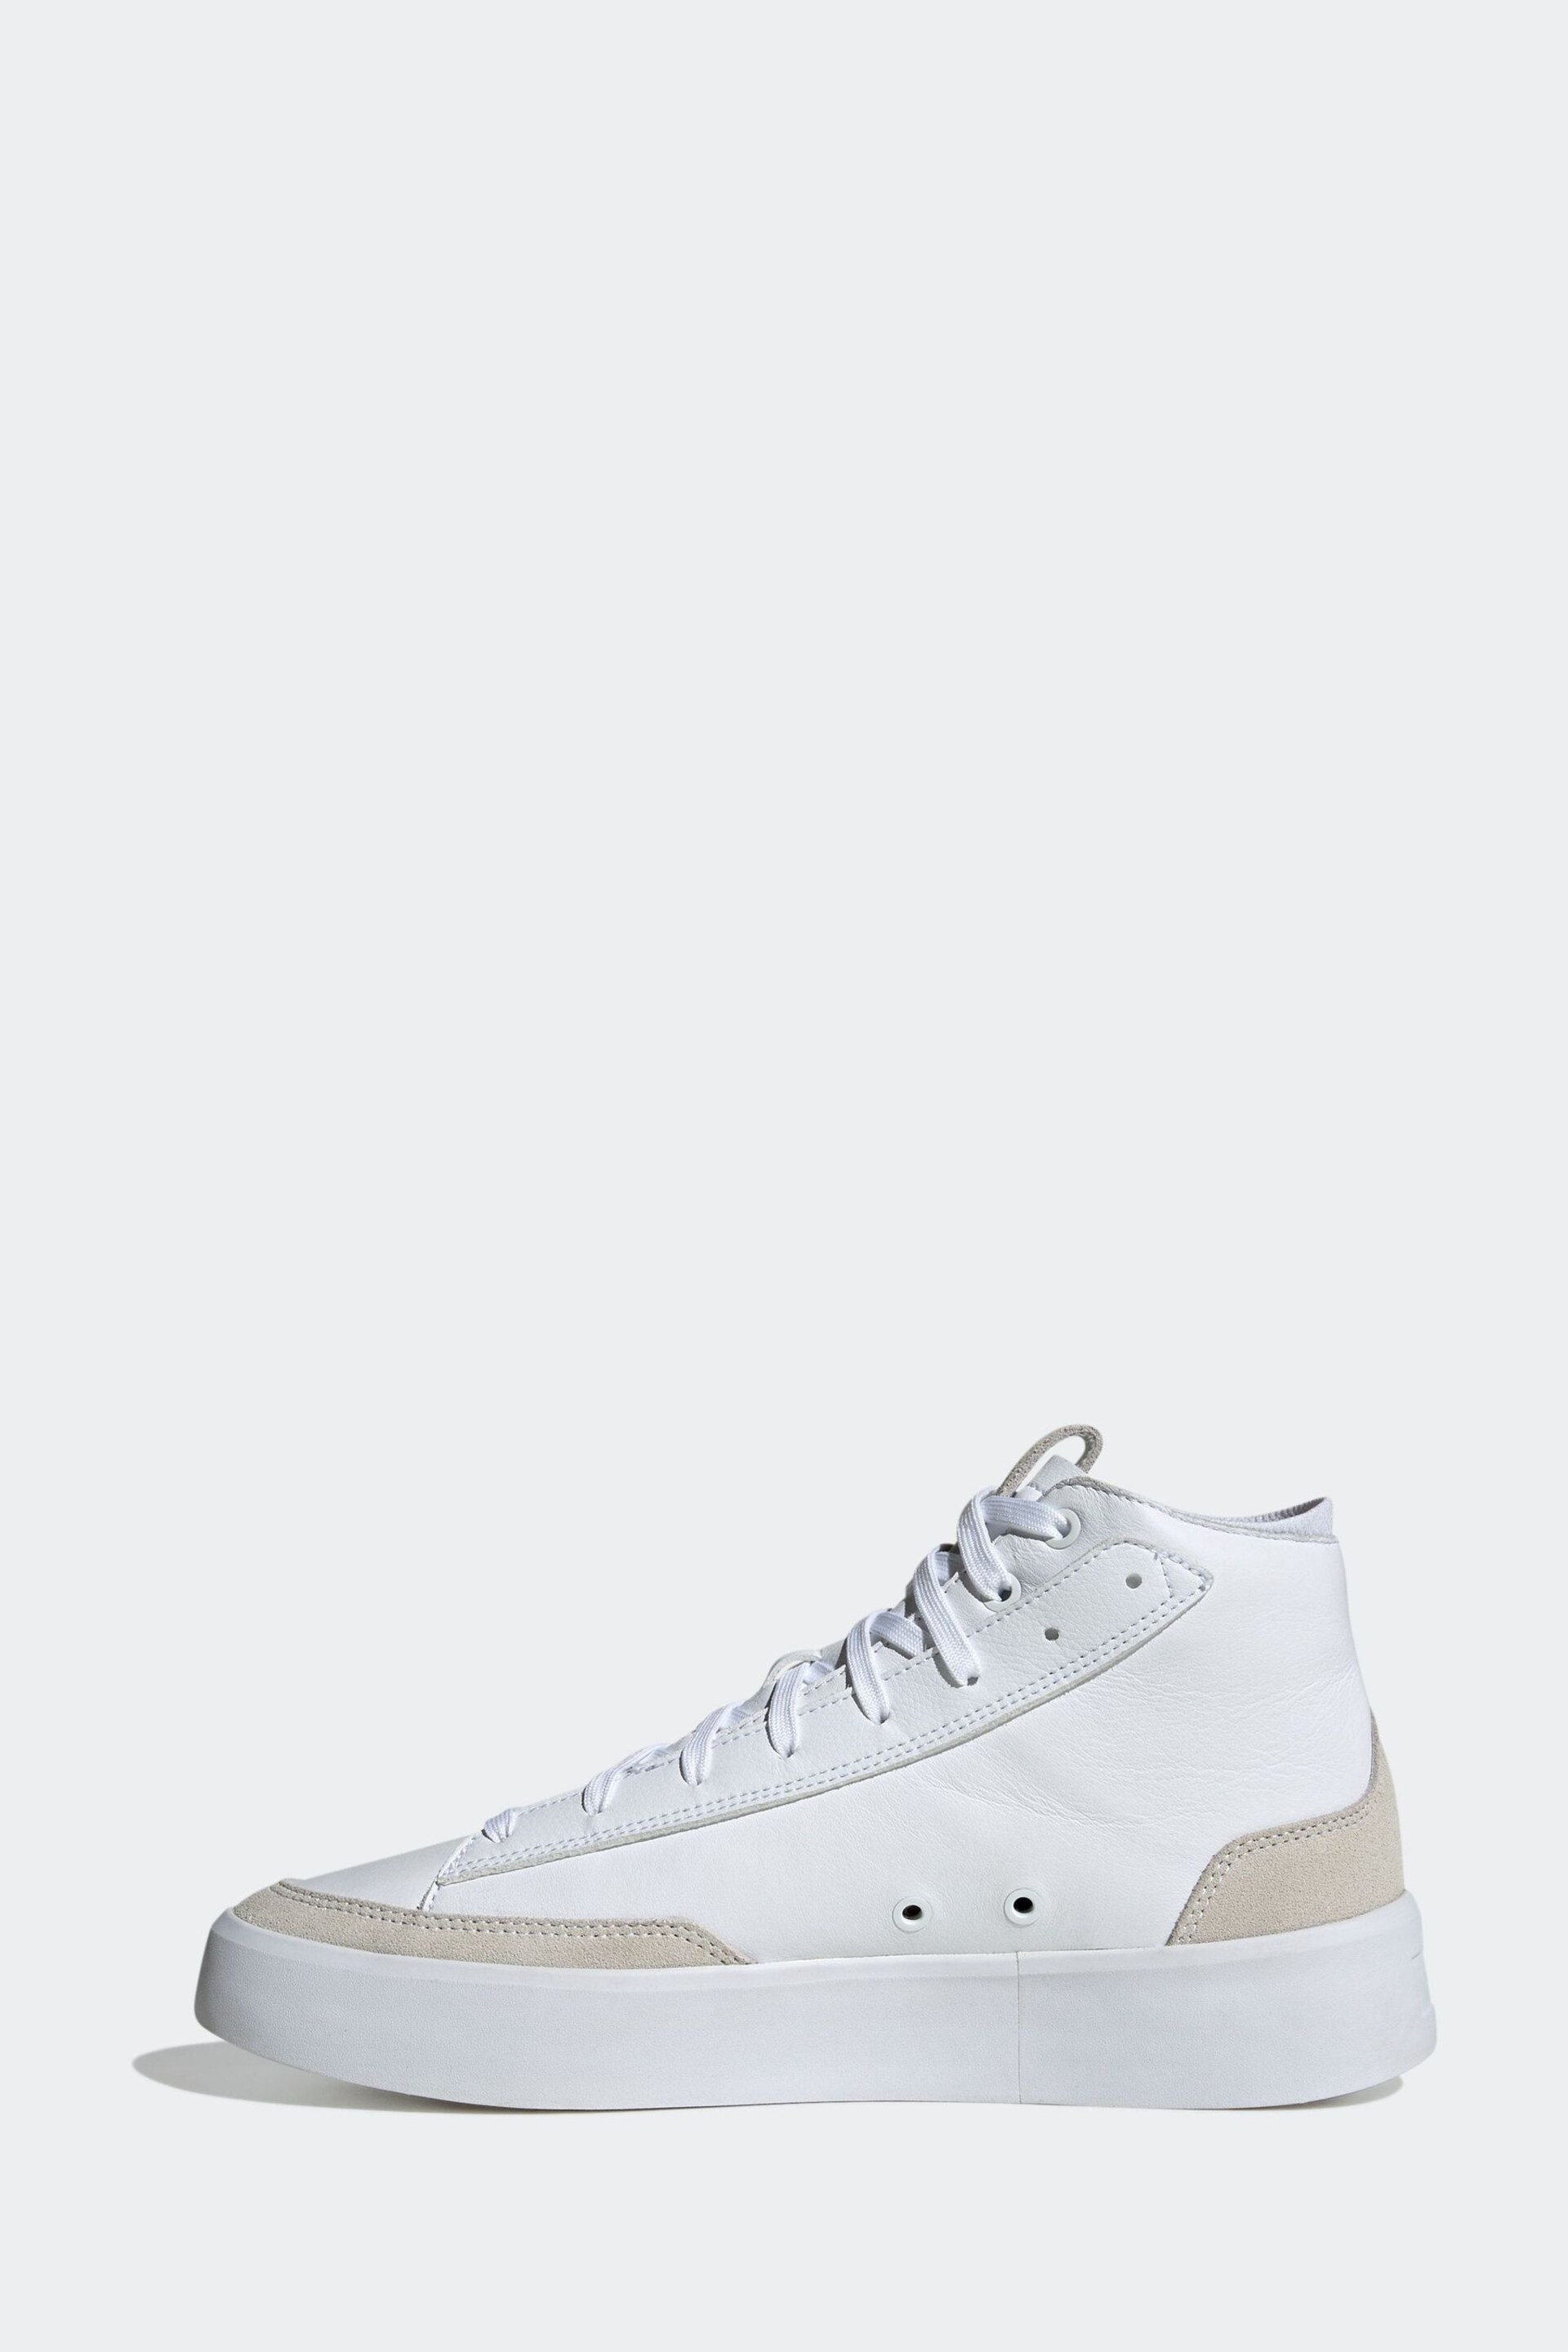 adidas White Znsored HI Prem Leather Trainers - Image 3 of 12